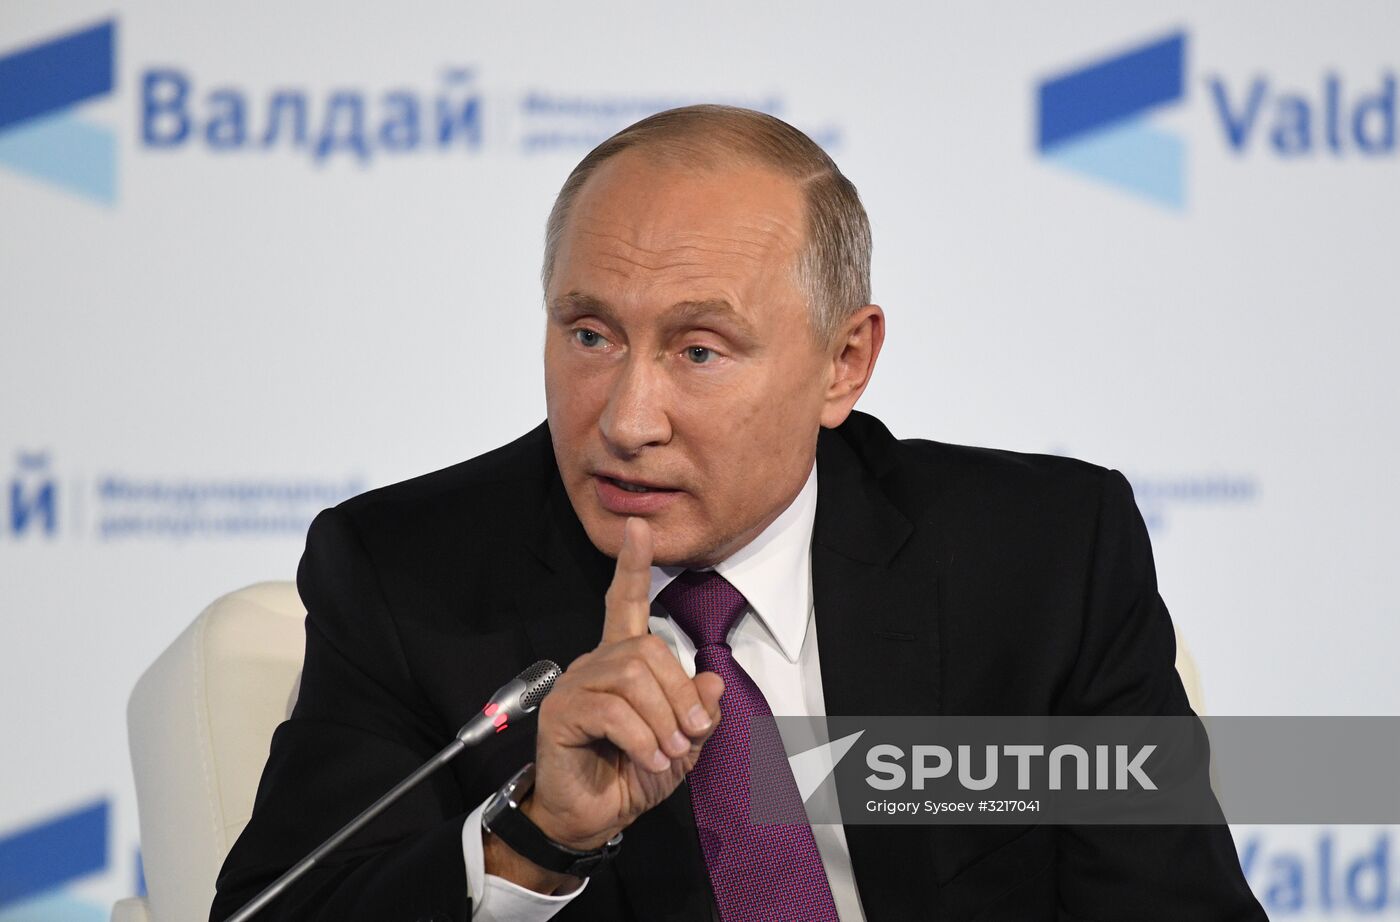 Russian President Vladimir Putin takes part in final plenary session of Valdai International Discussion Club meeting